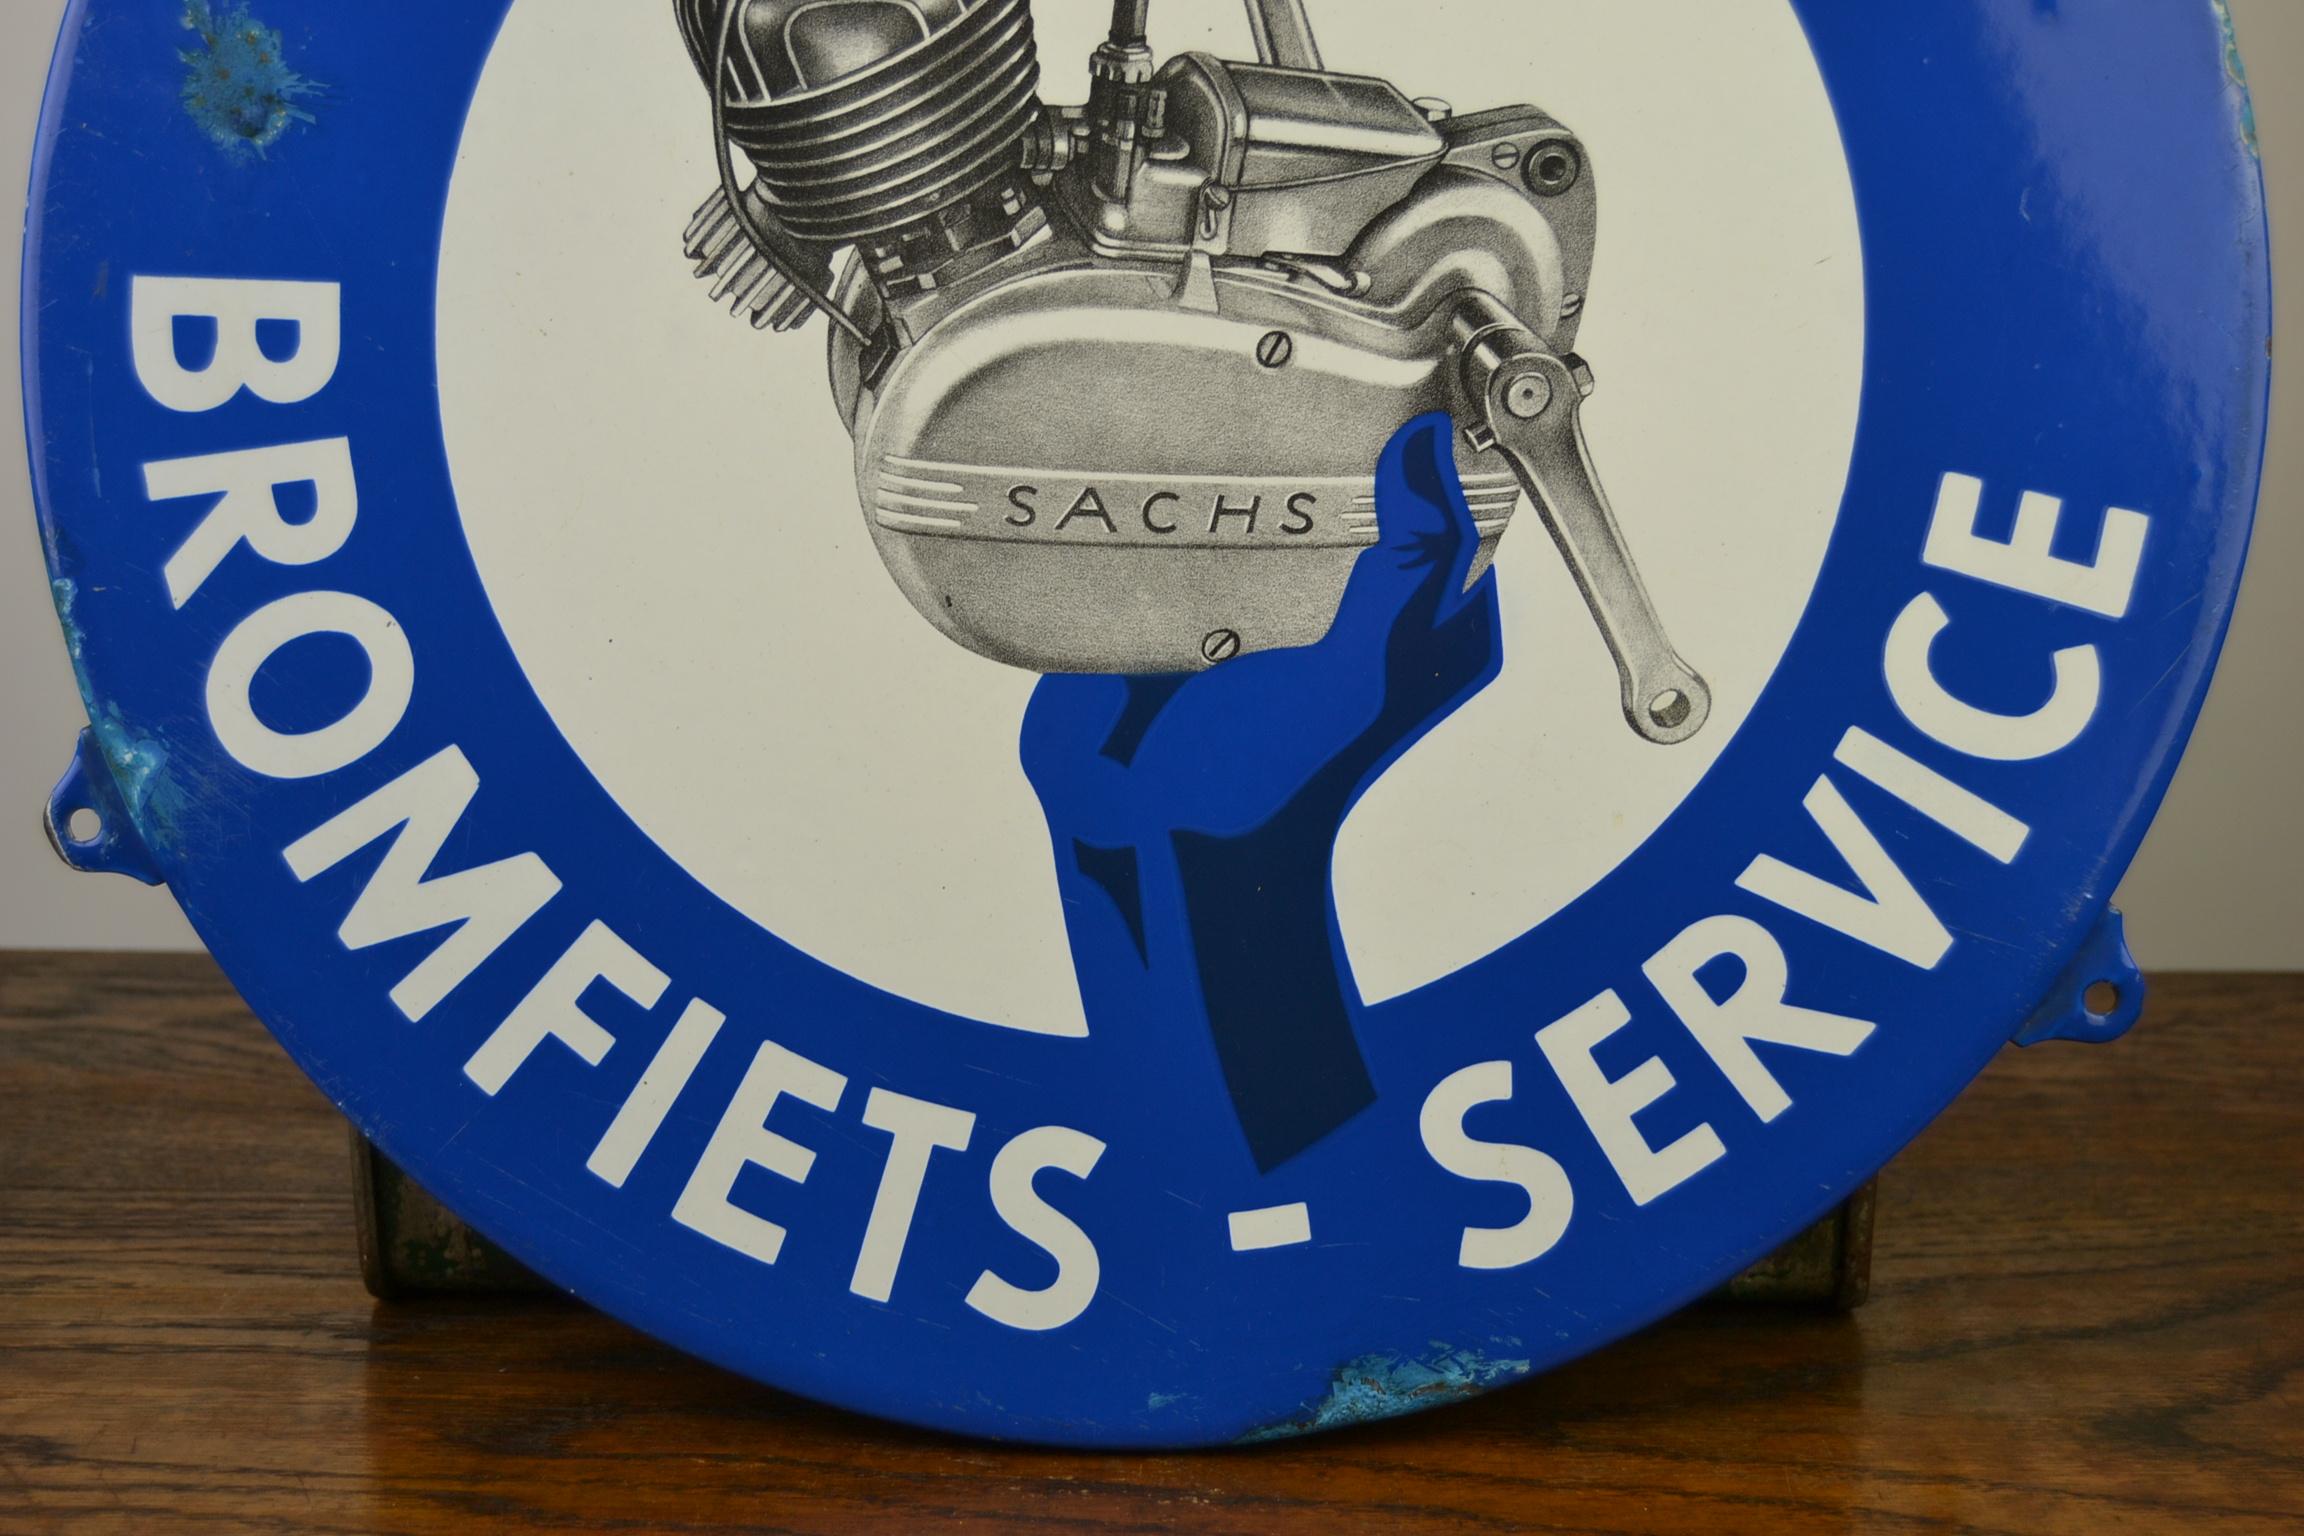 Vintage Enamel Advertising Sign SACHS Engine Block, 1950s 1